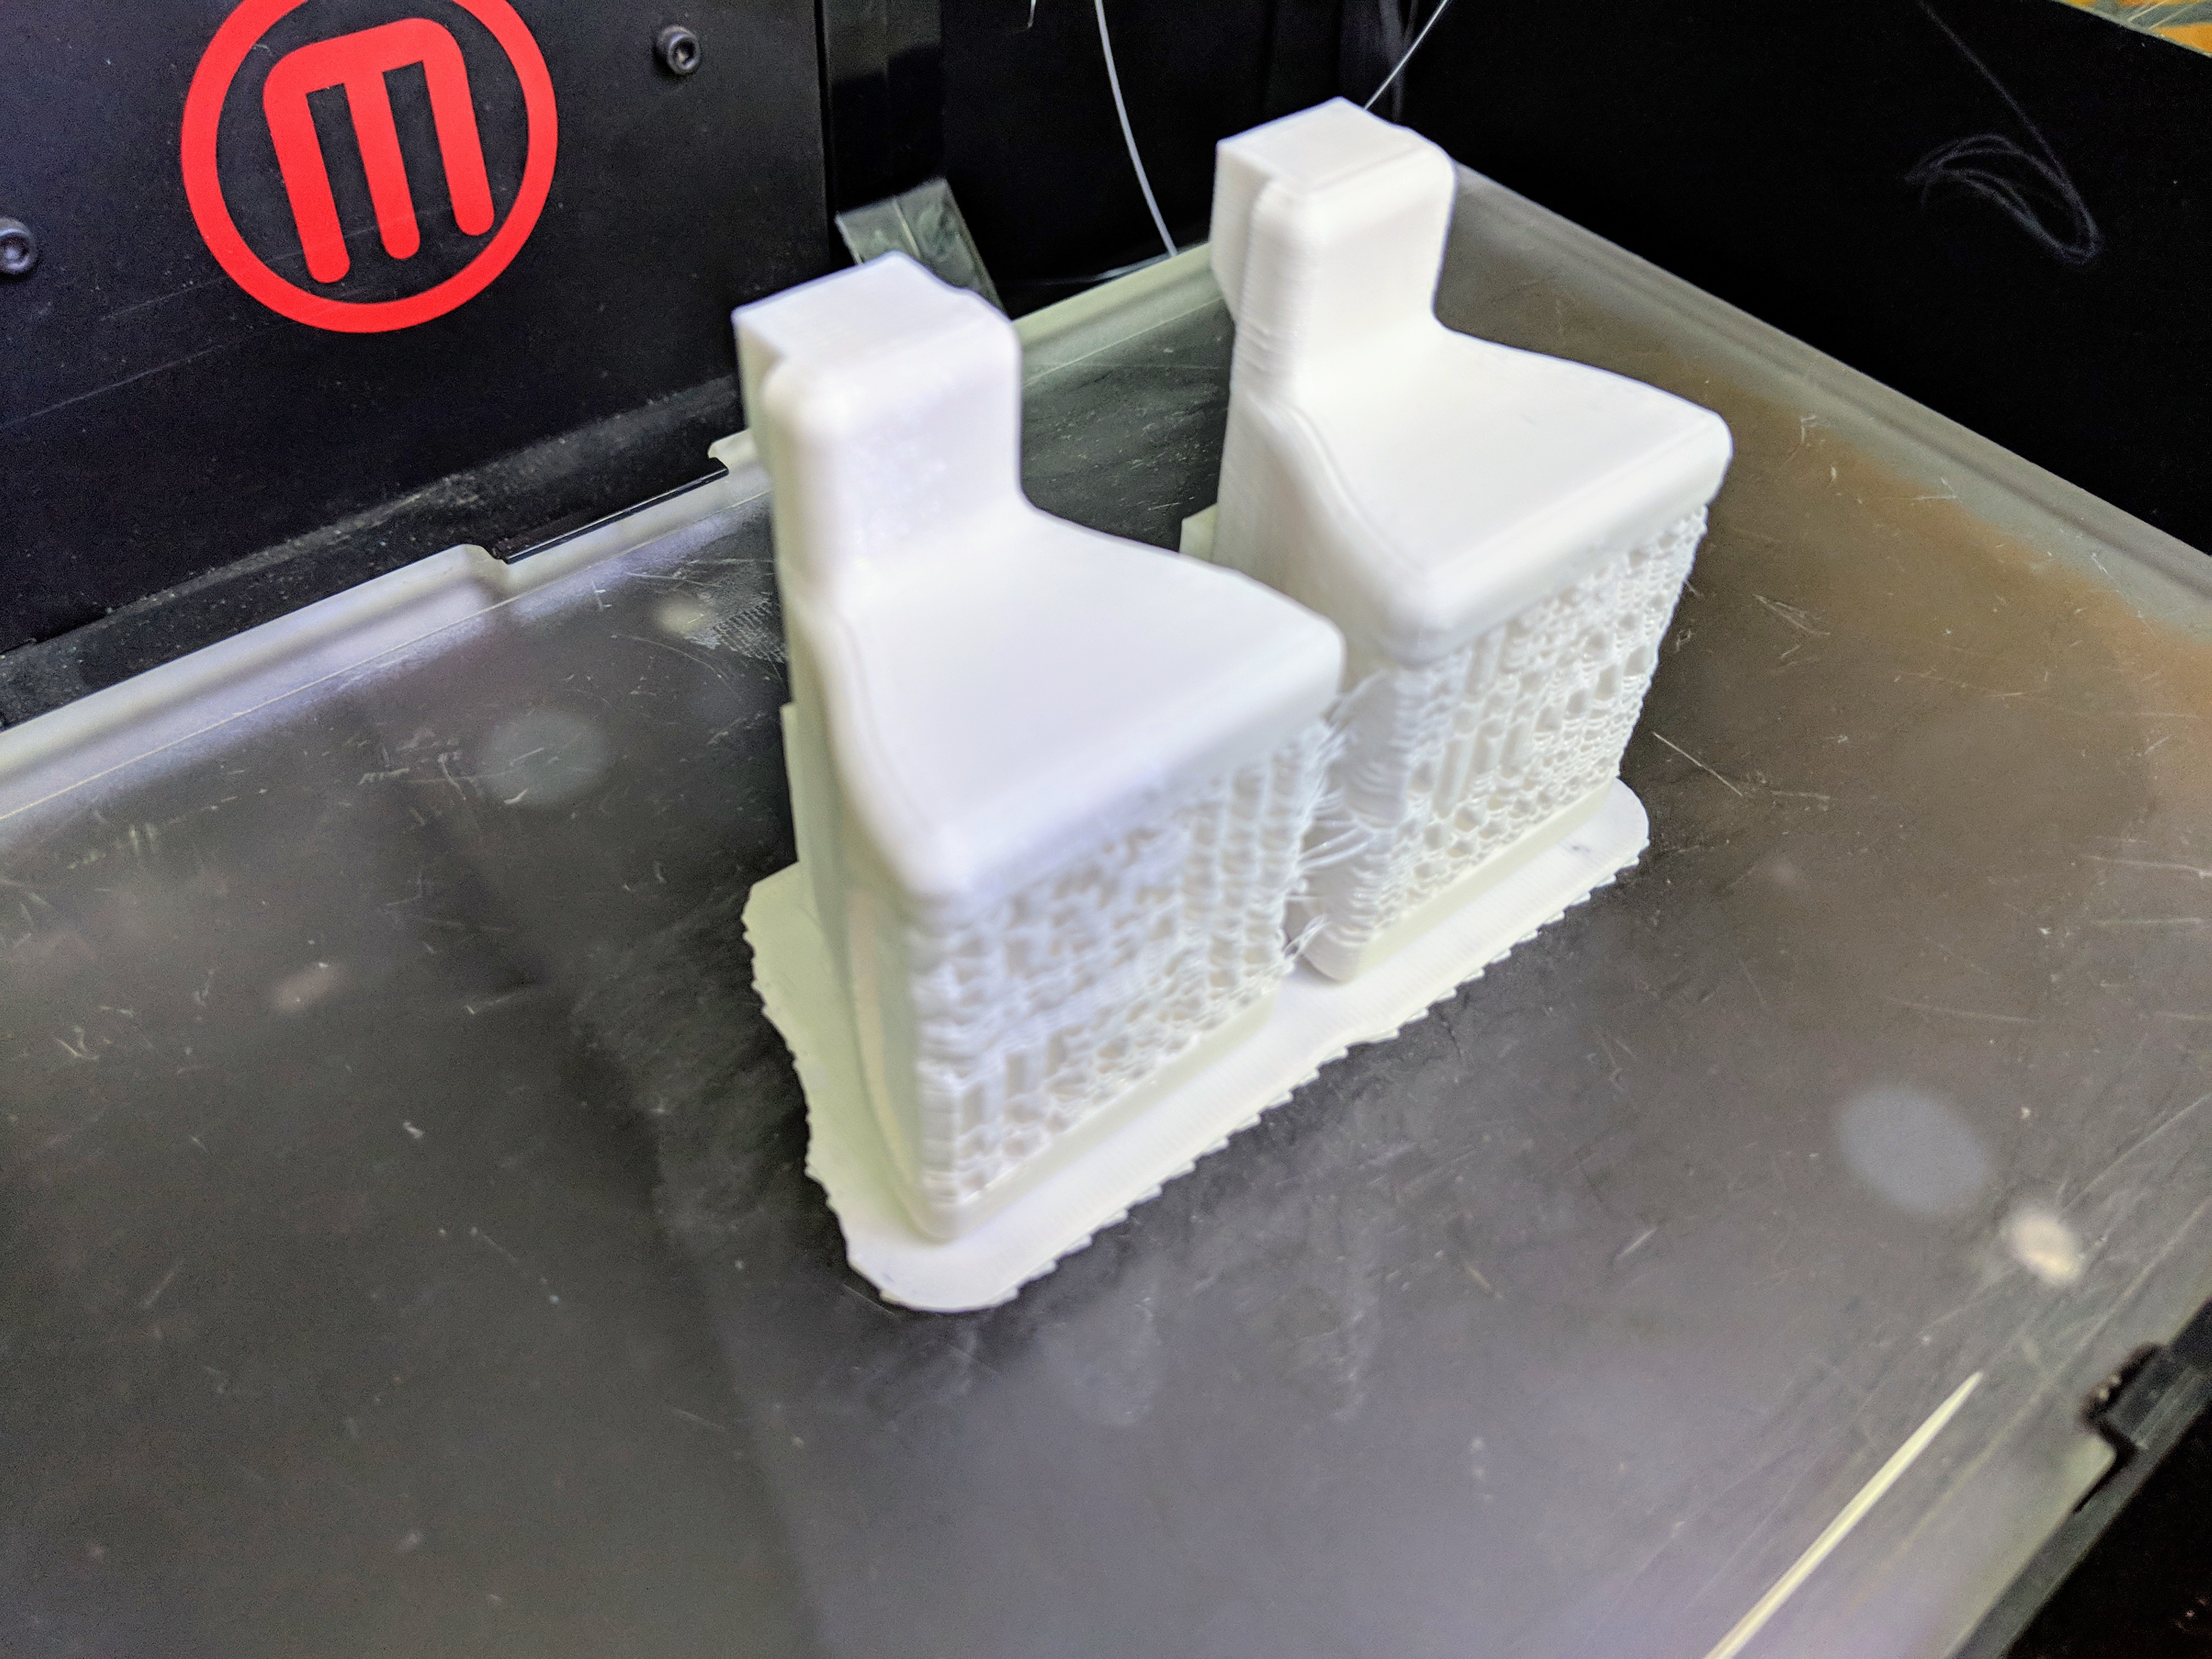 3D printed fabrication